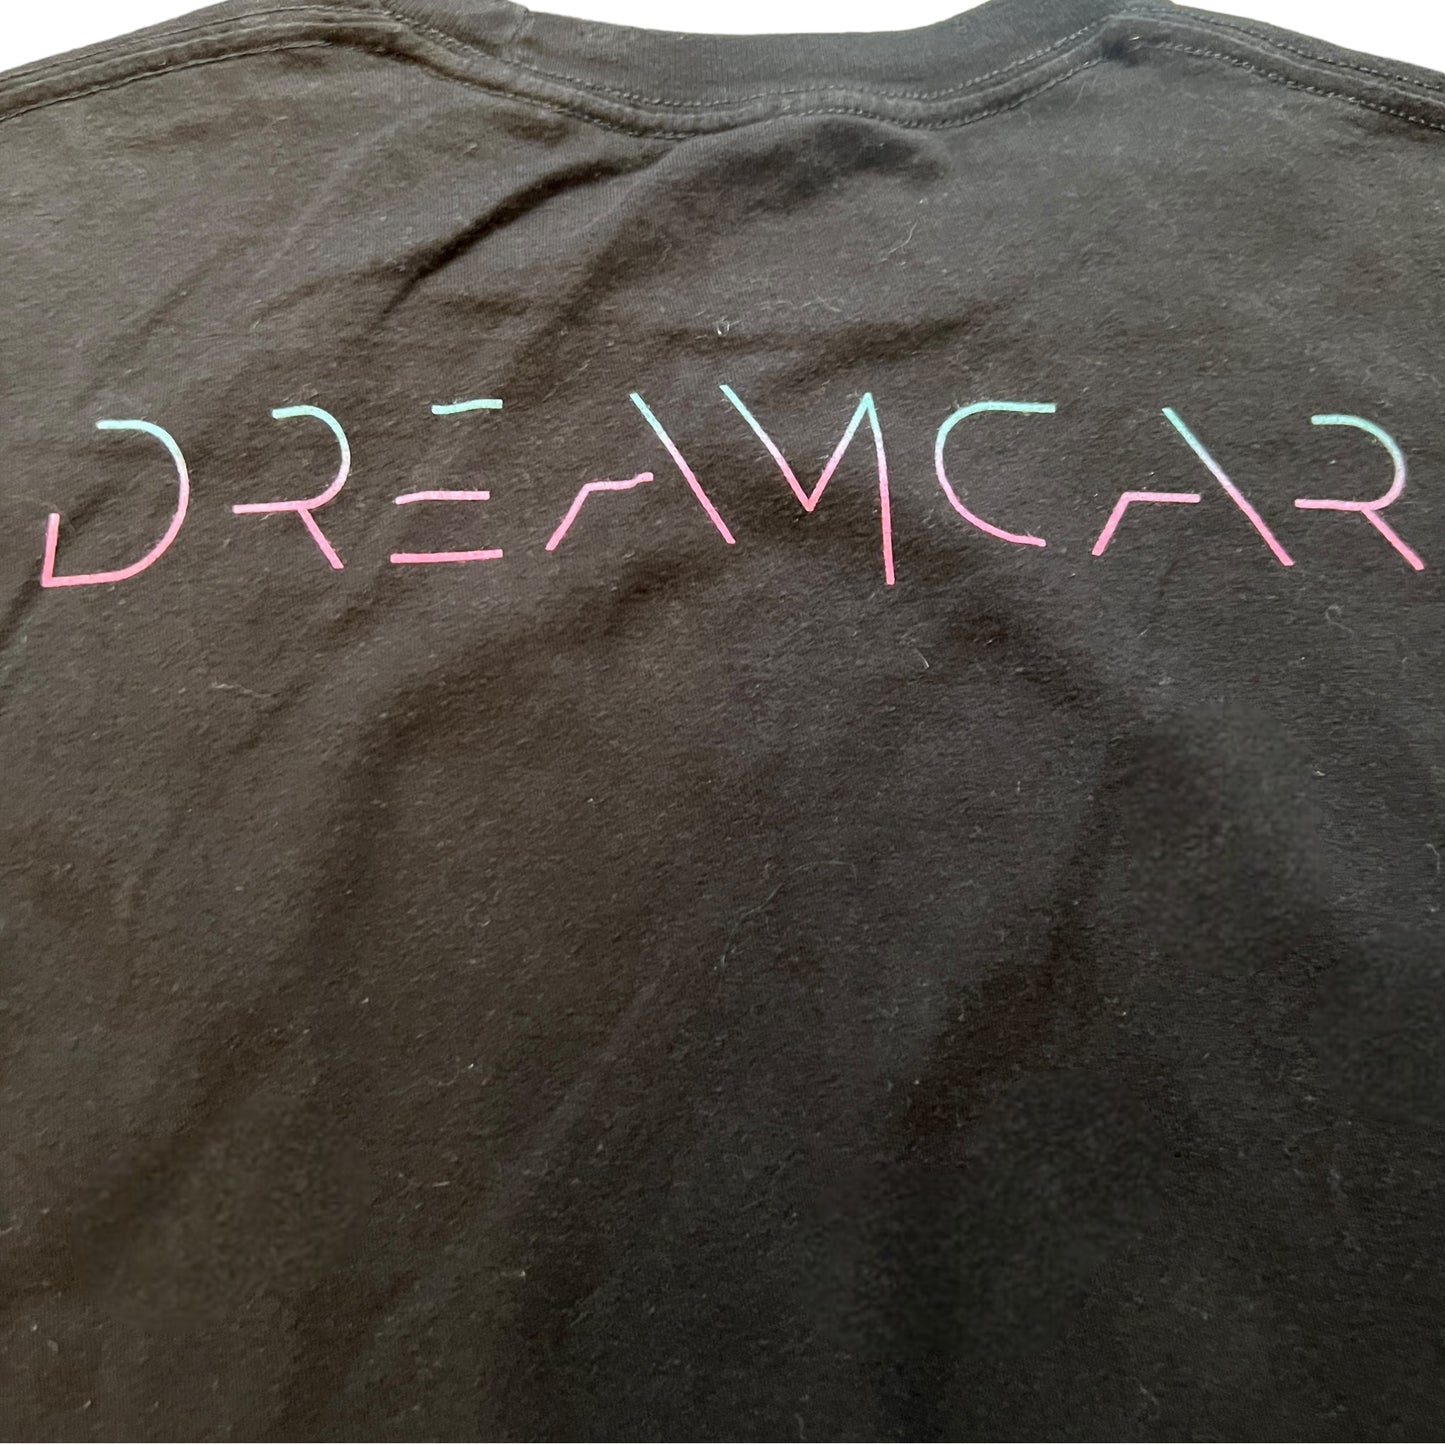 Dreamcar Band T-Shirt Size L AFI No Doubt Davey Havok